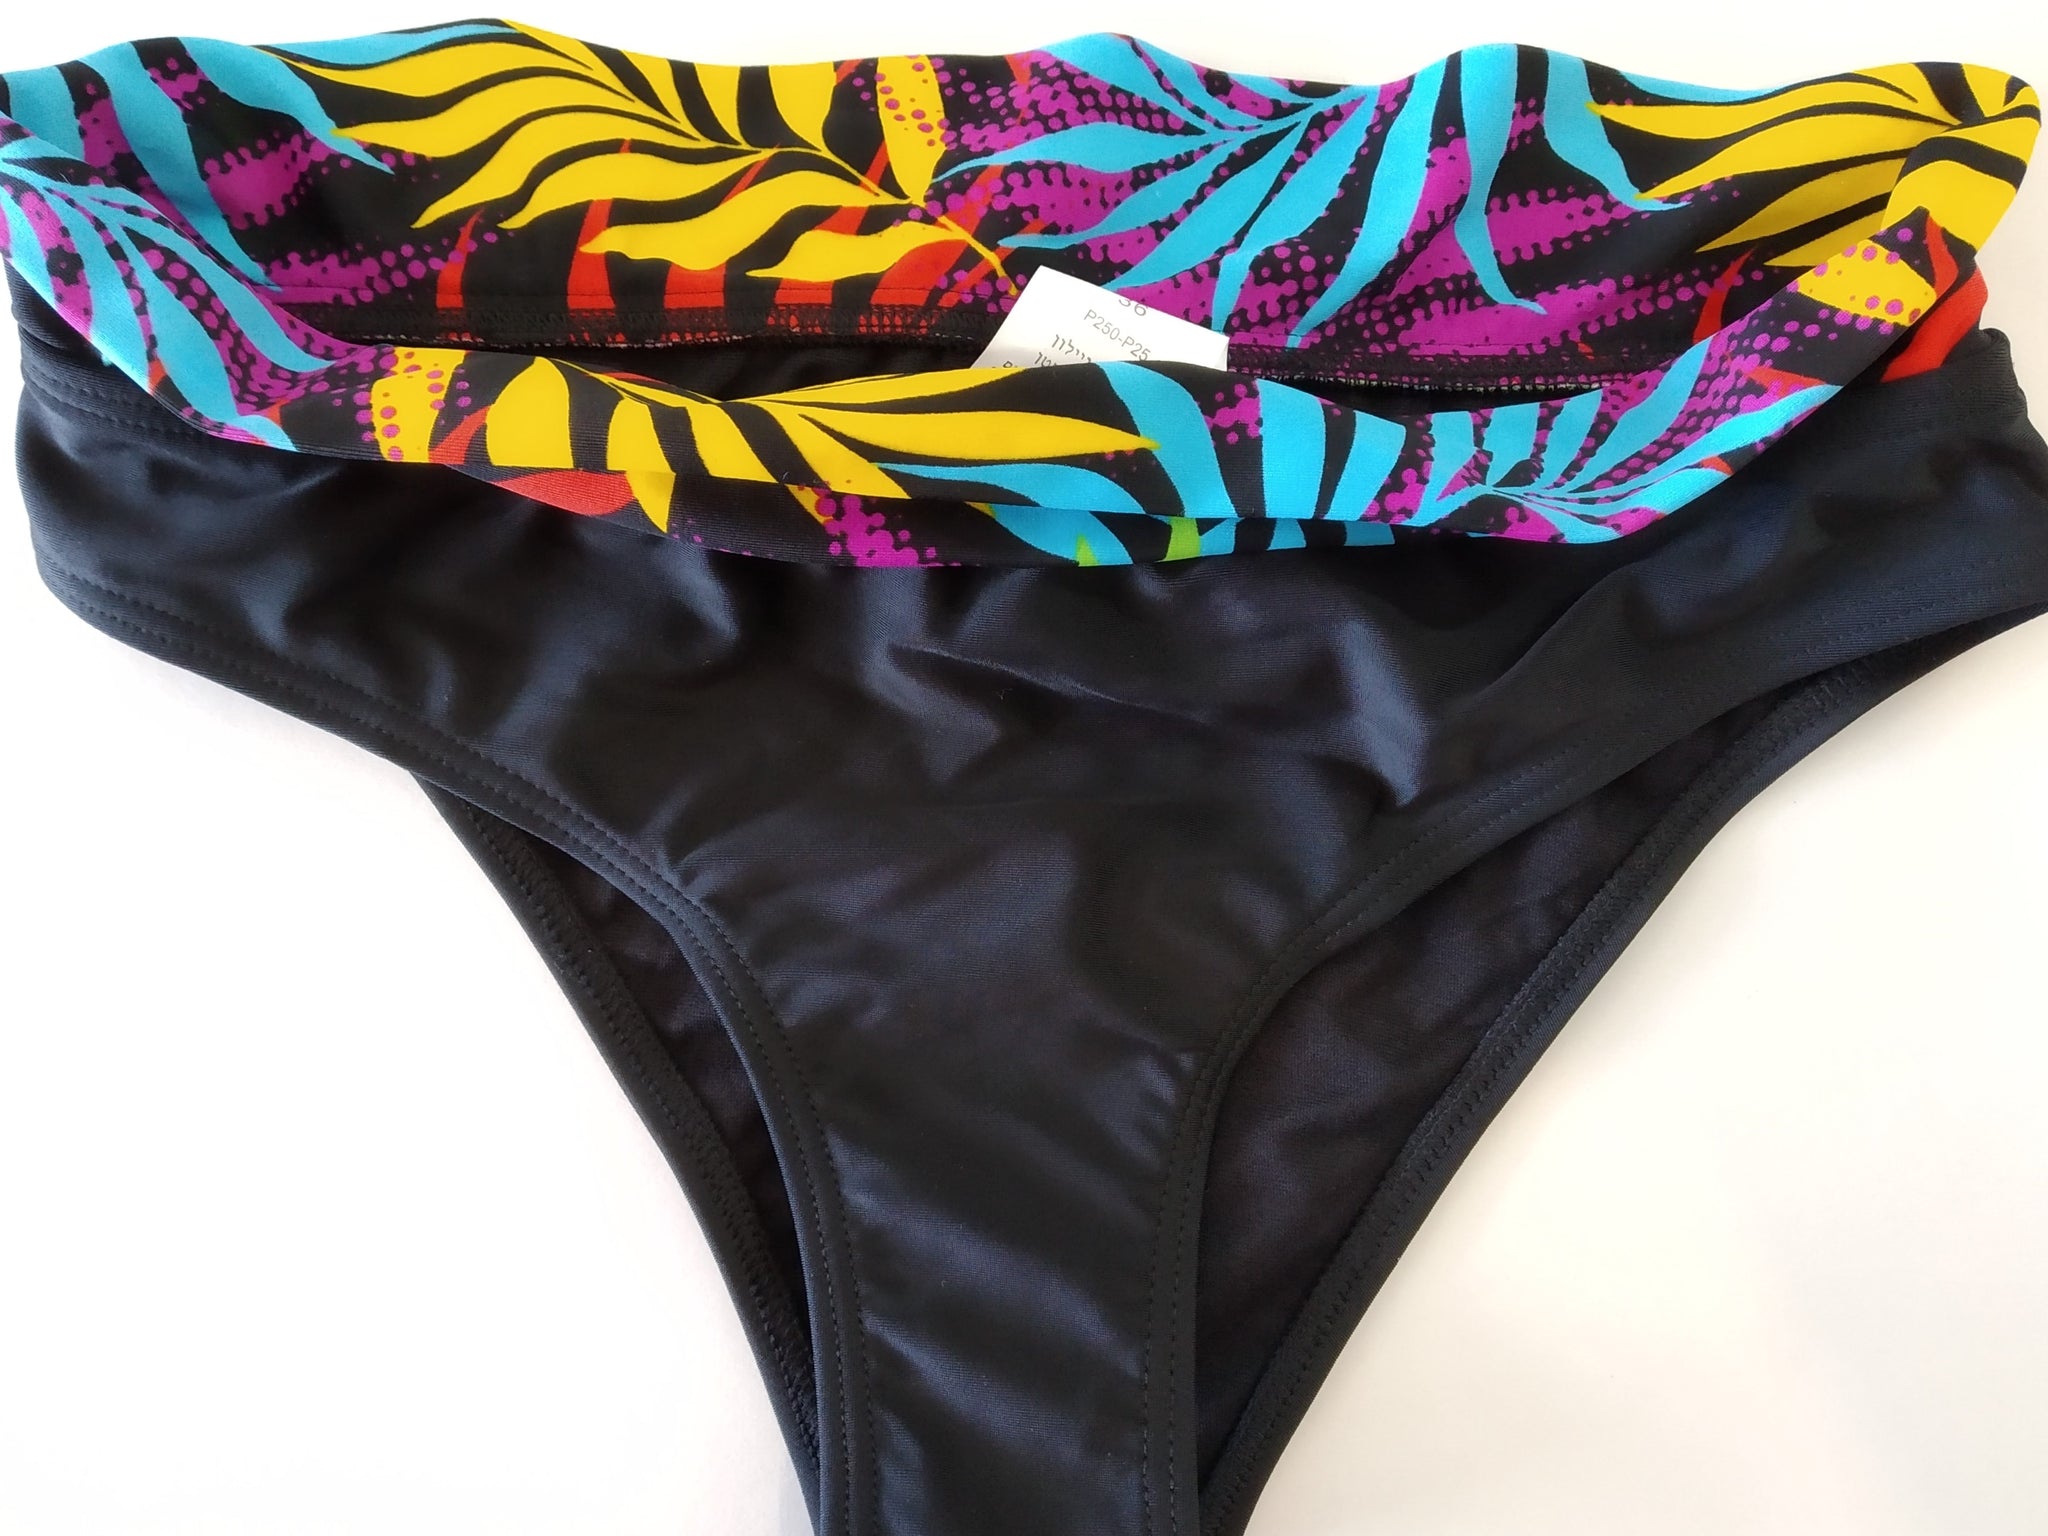 🌎bikinn-multicolored cuff swimsuit,maillot de bain à revers multicolore,traje de baño bragas